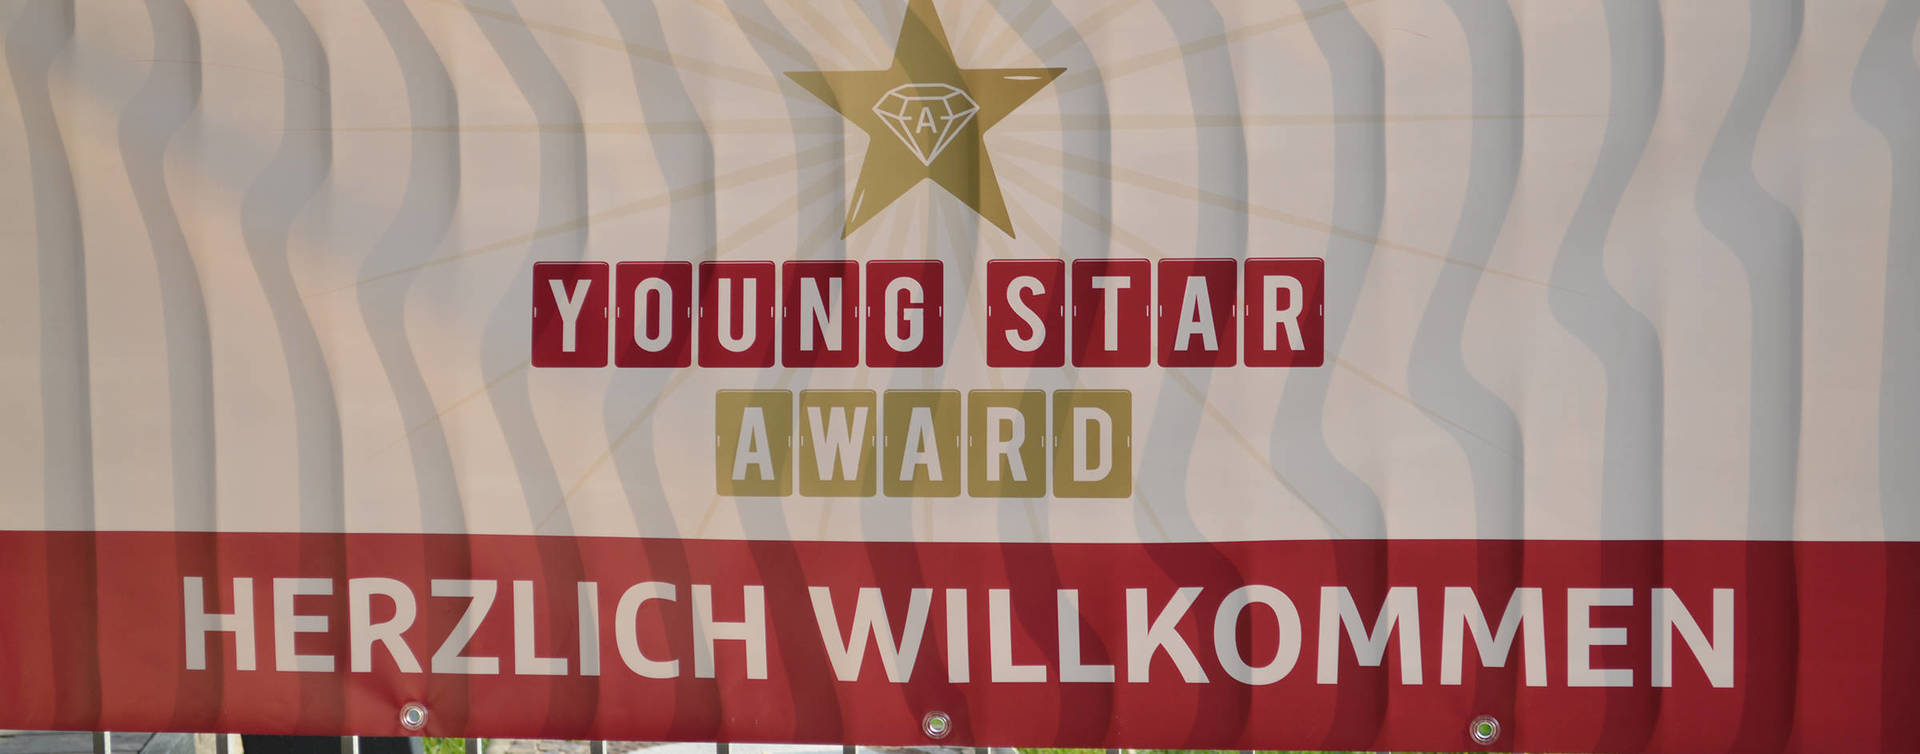 YOUNG STAR Award - H-Hotels.com